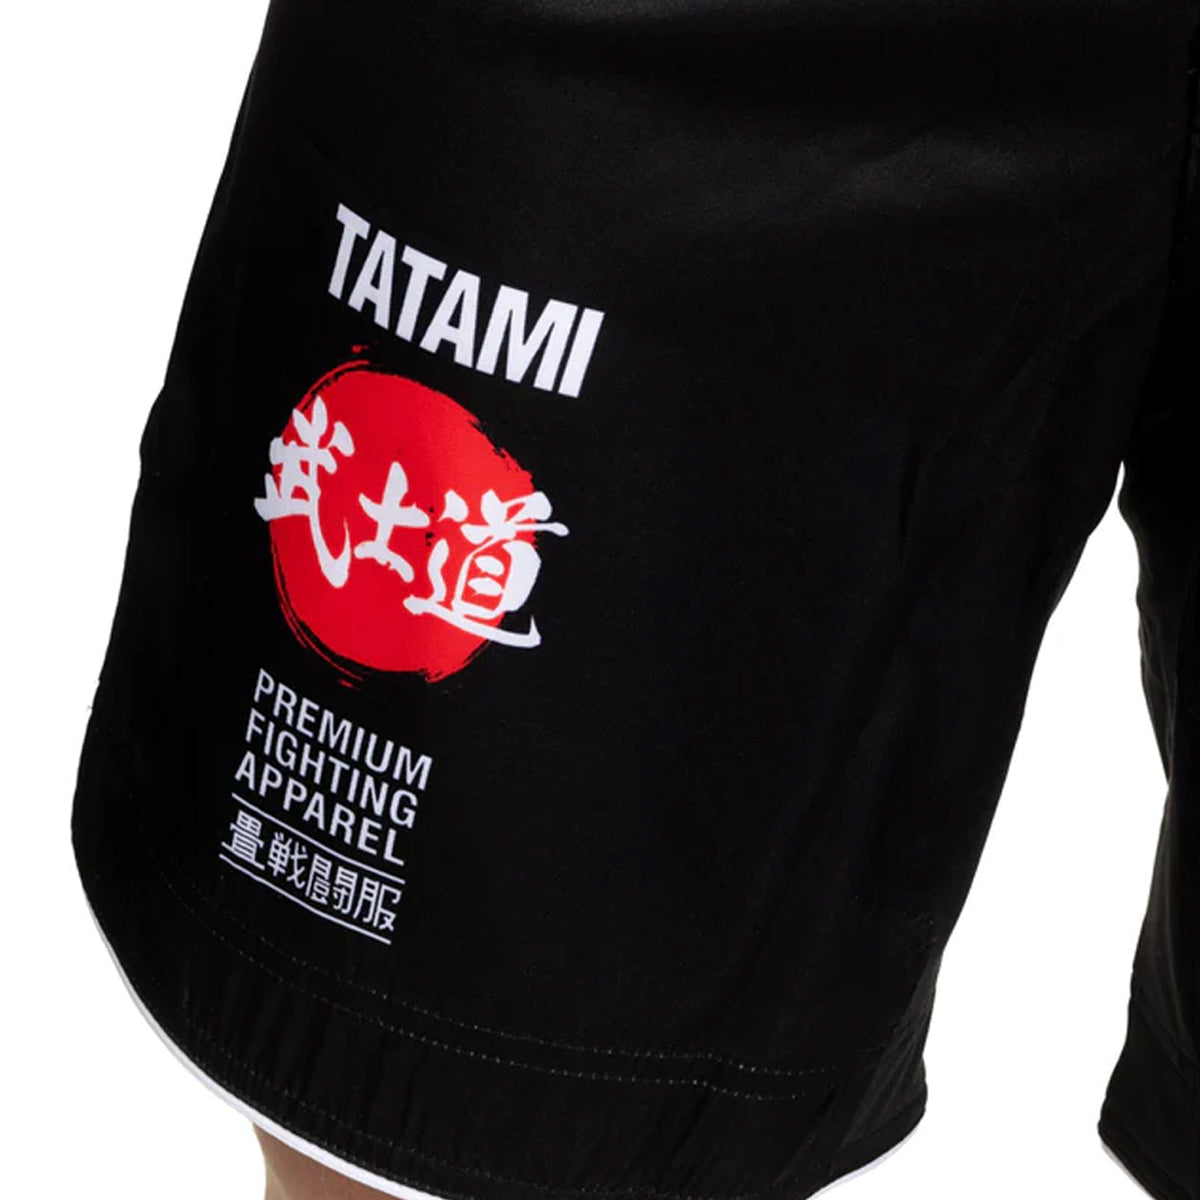 Tatami Fightwear Women's Bushido Grappling Shorts - Black Tatami